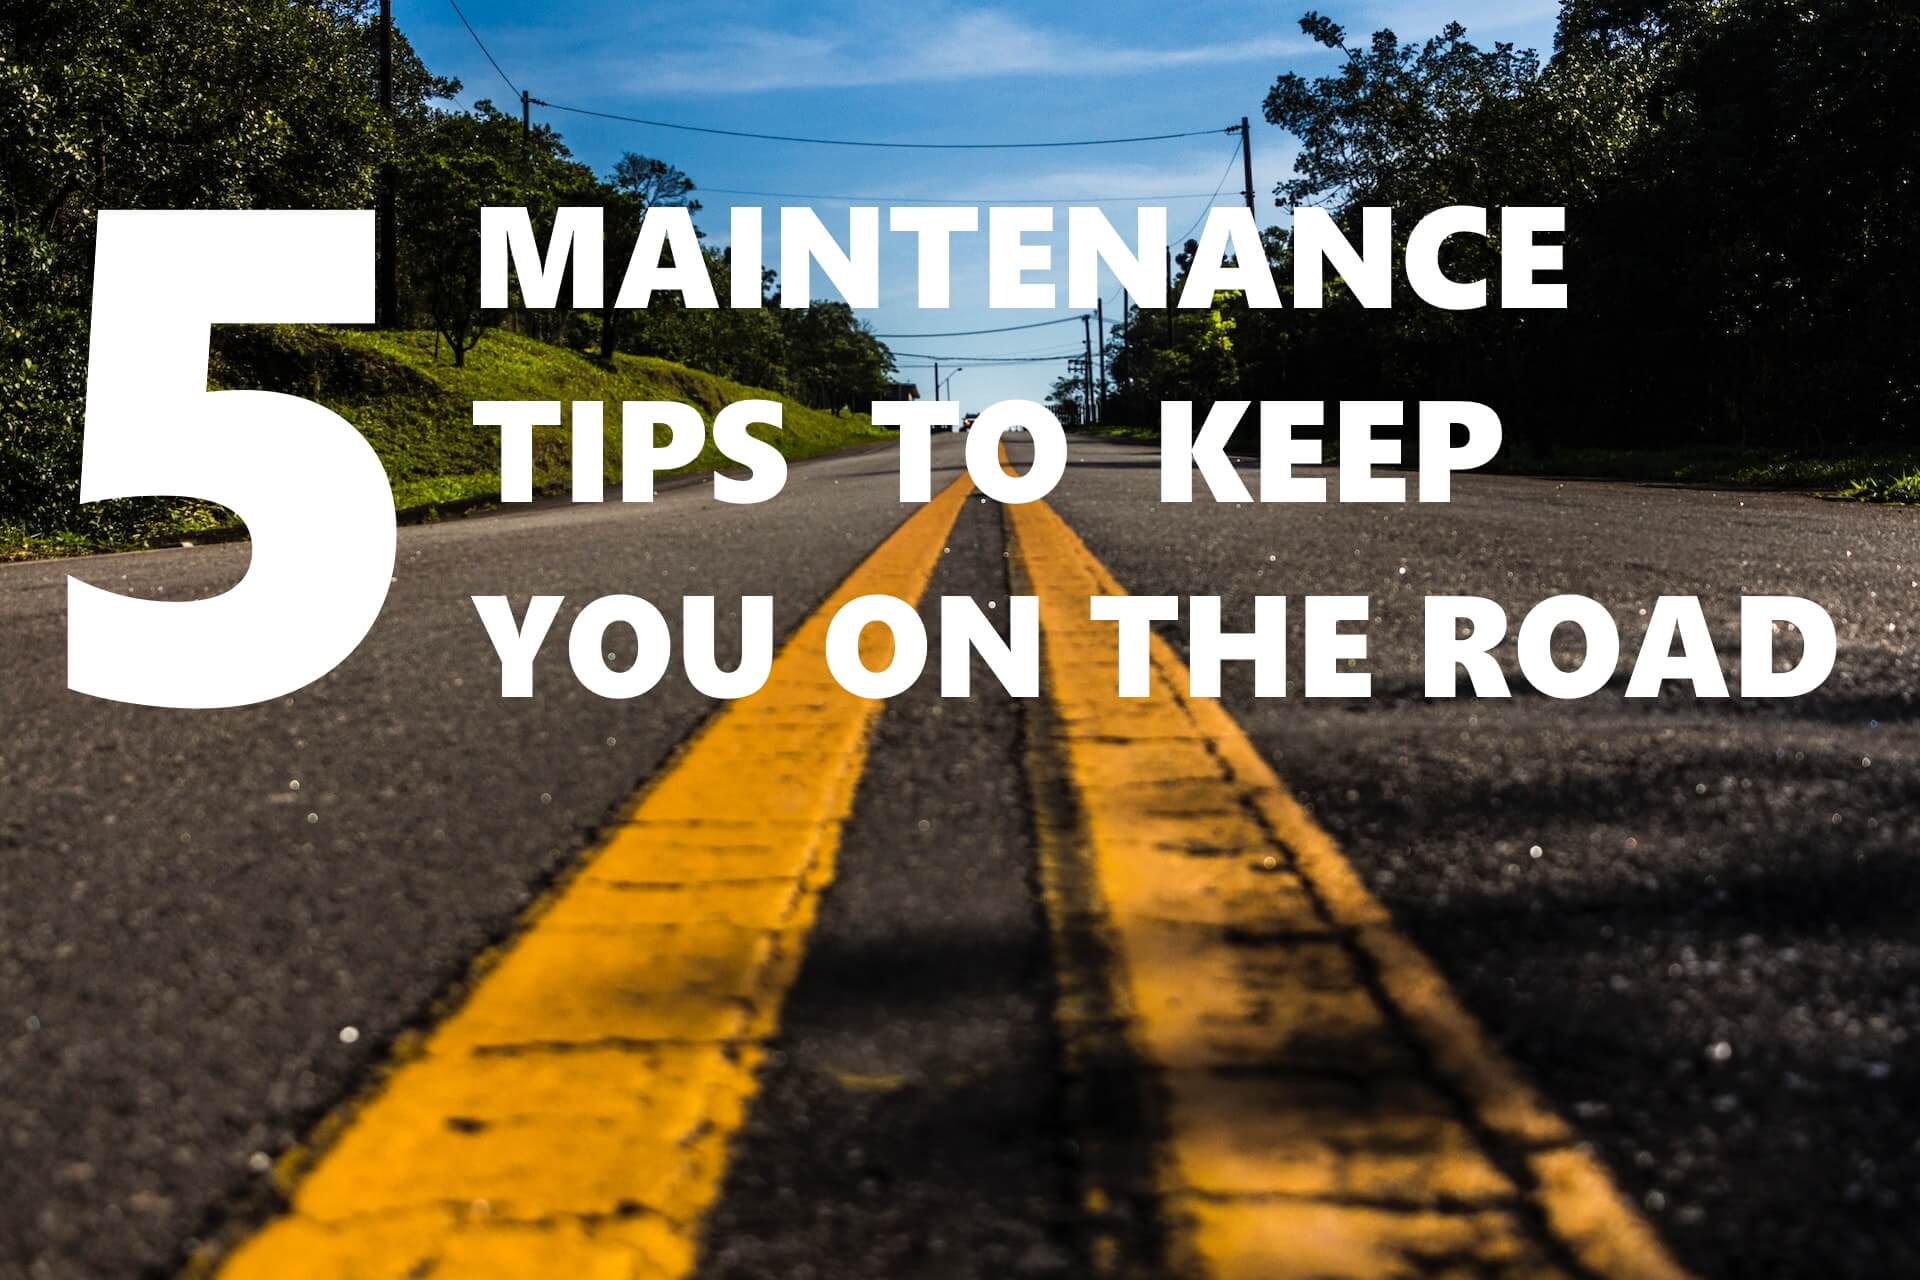 5 vehicle maintenance tips